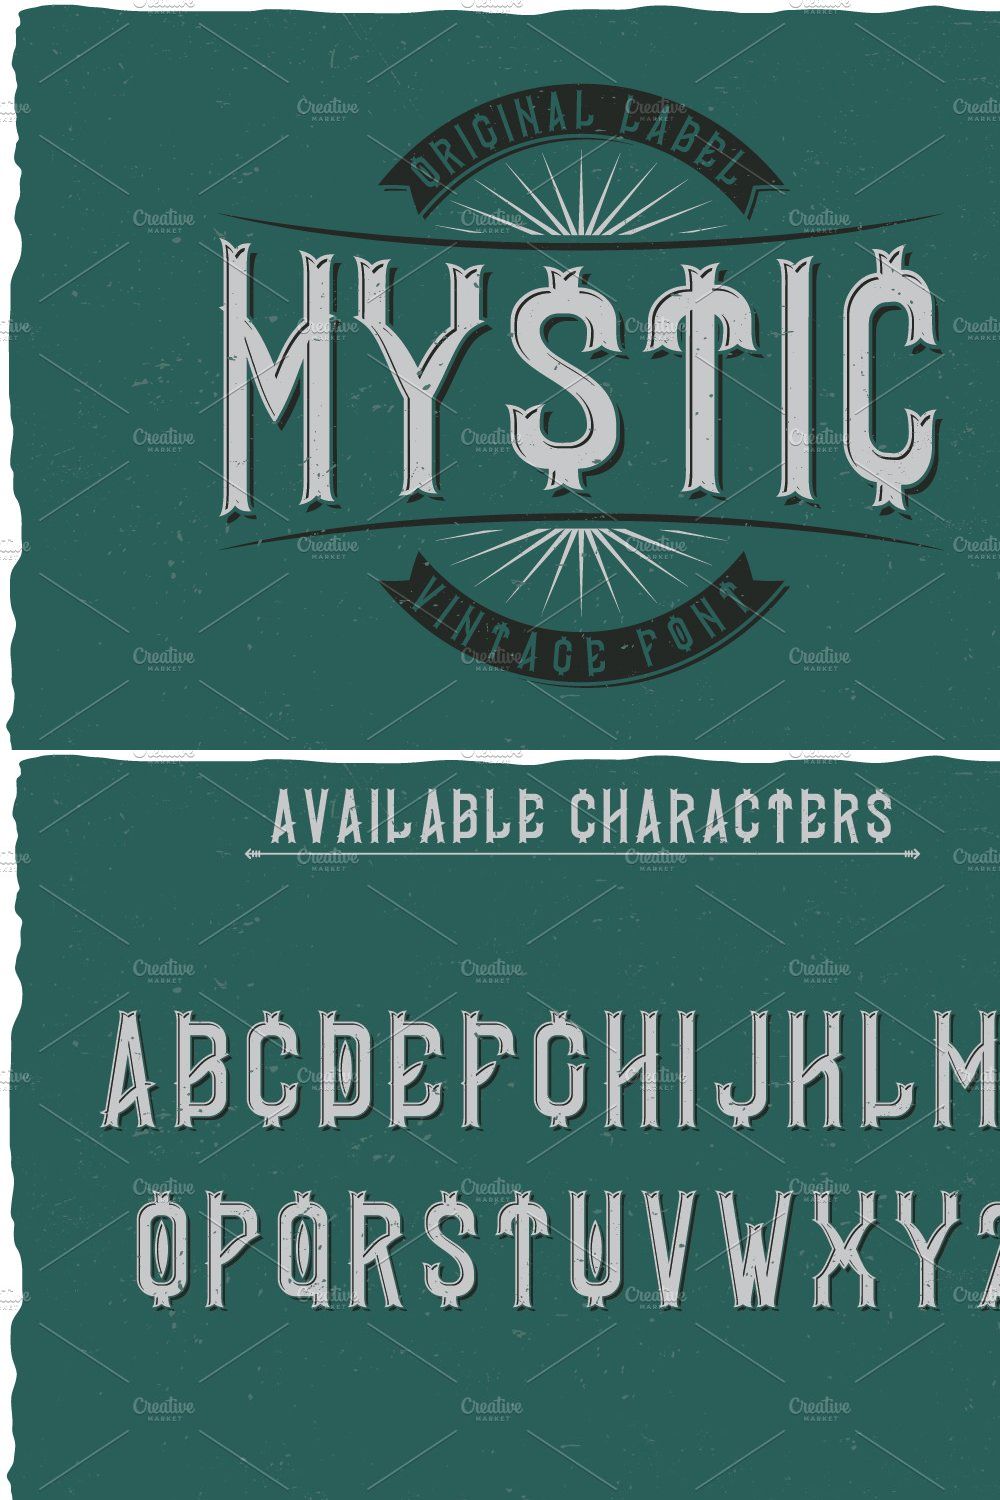 Mystic Vintage Label Typeface pinterest preview image.